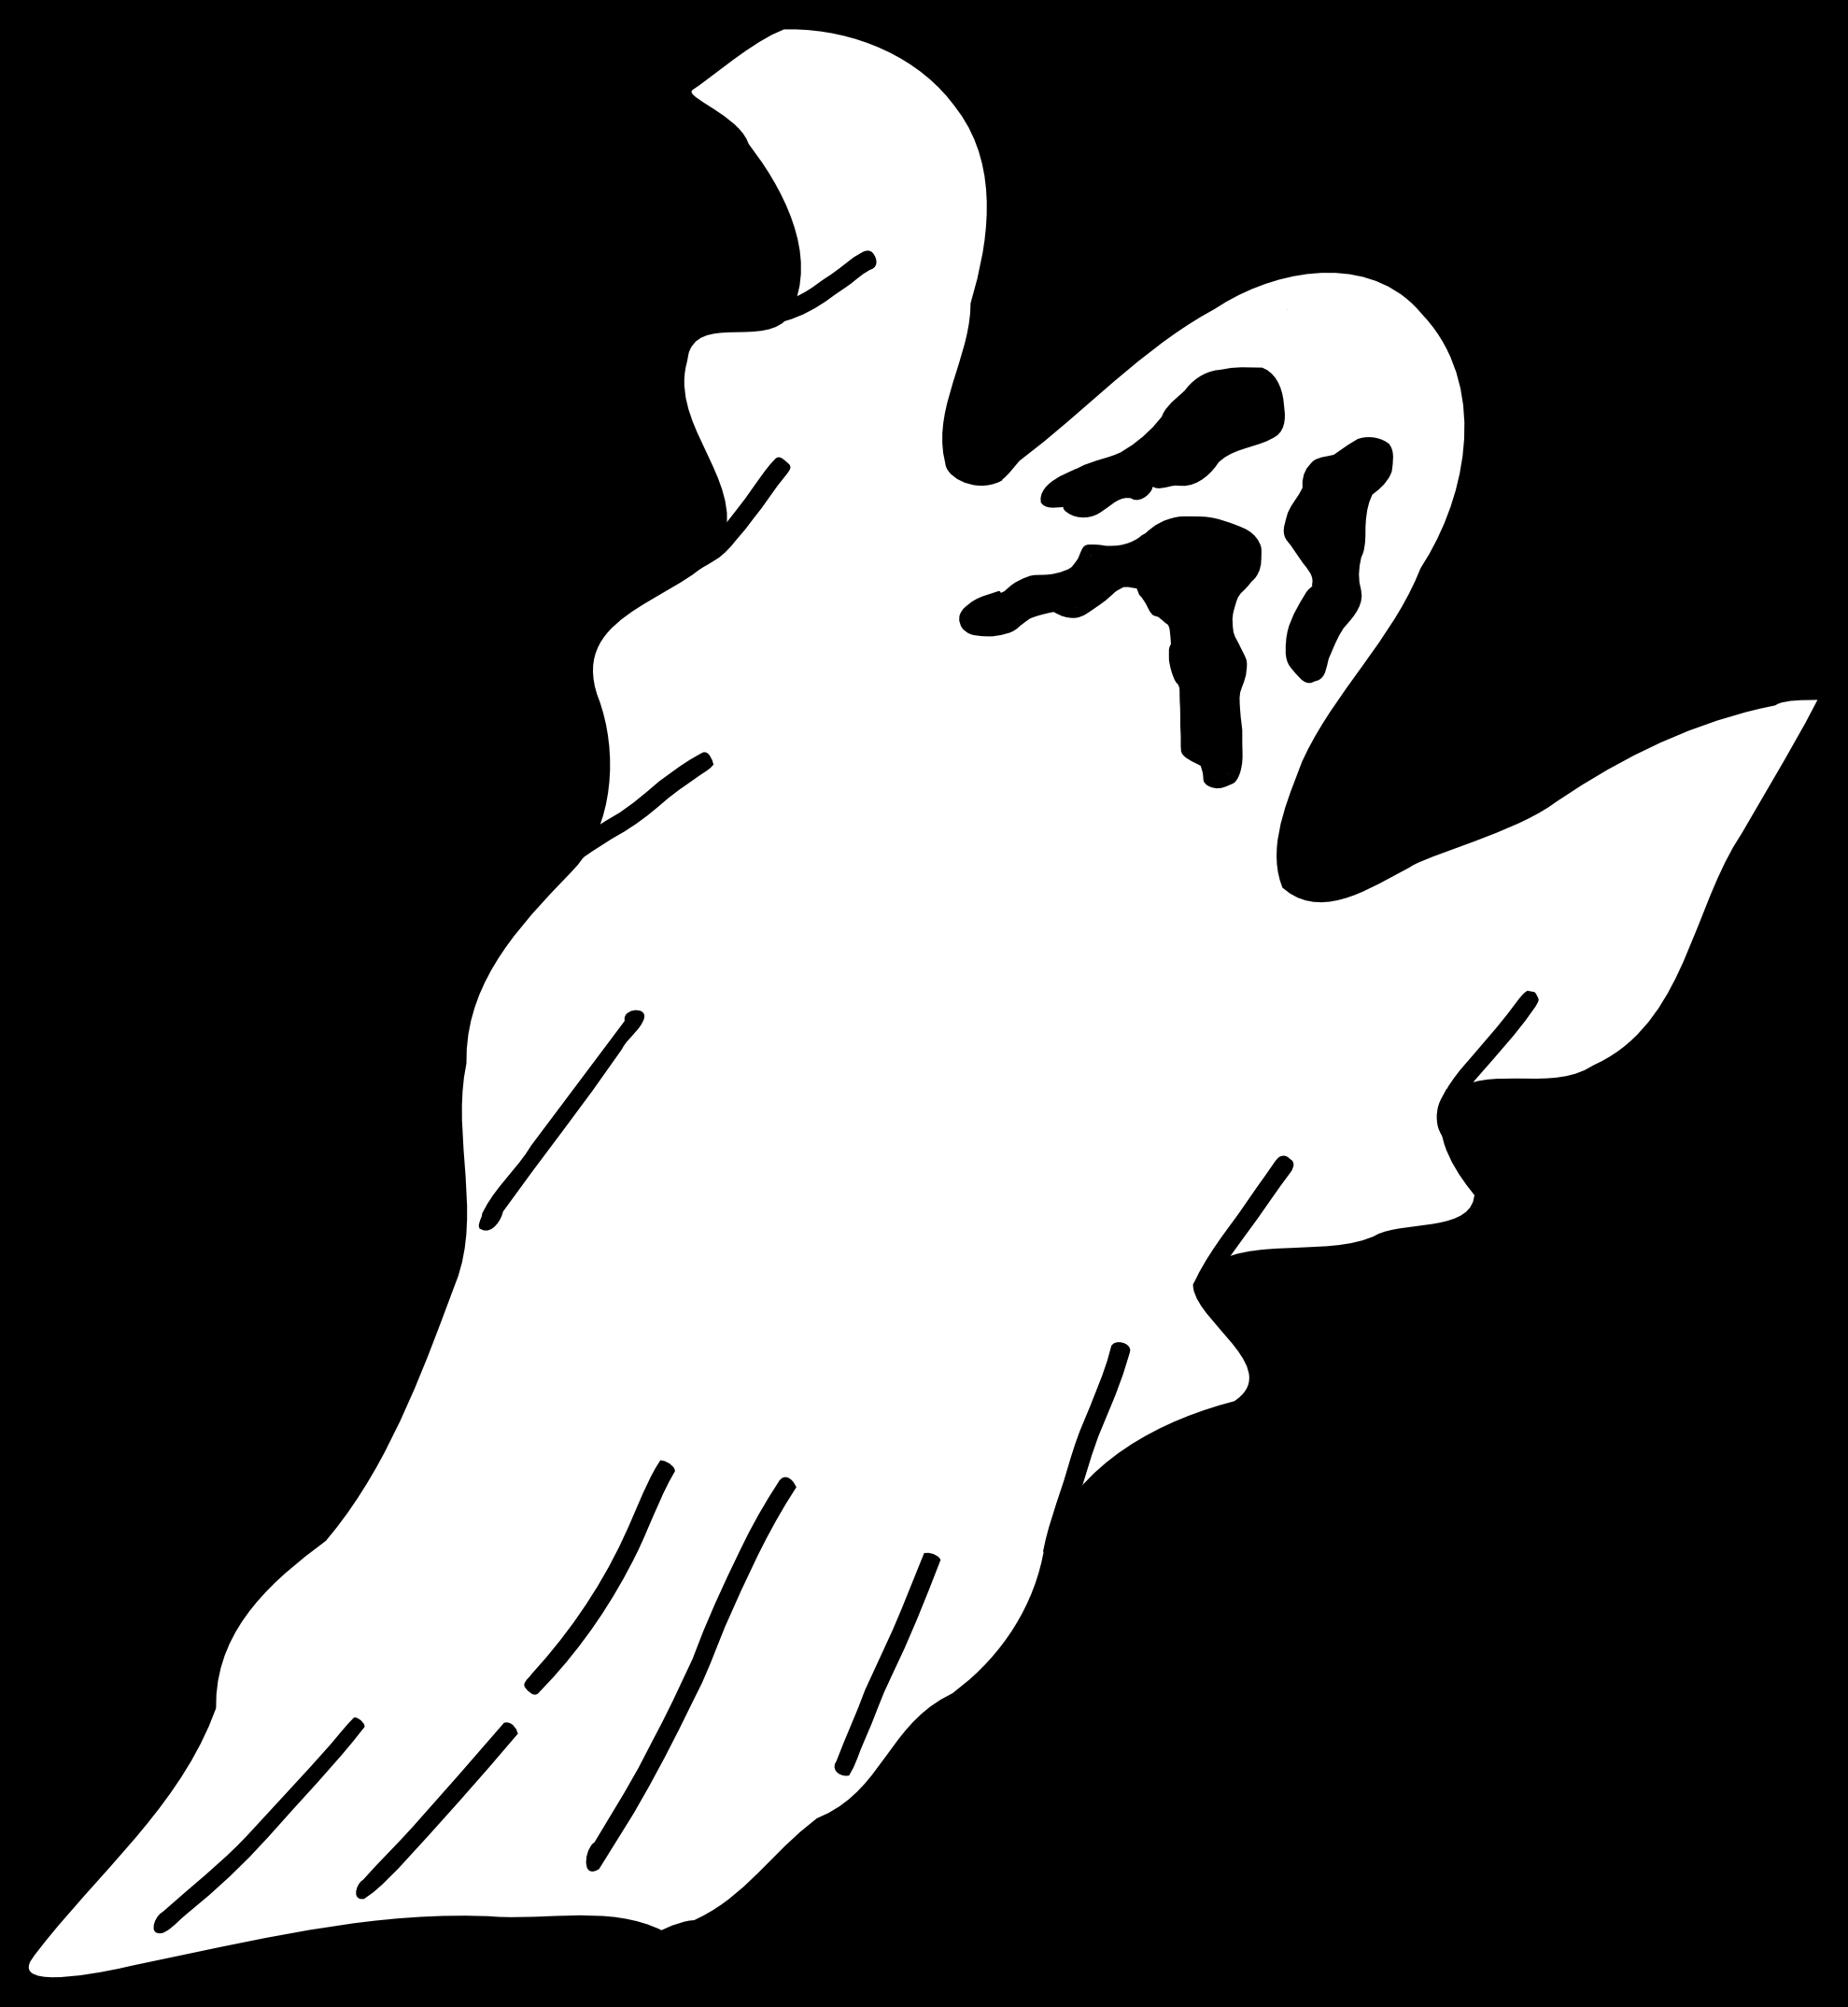 Ghost - Wikipedia